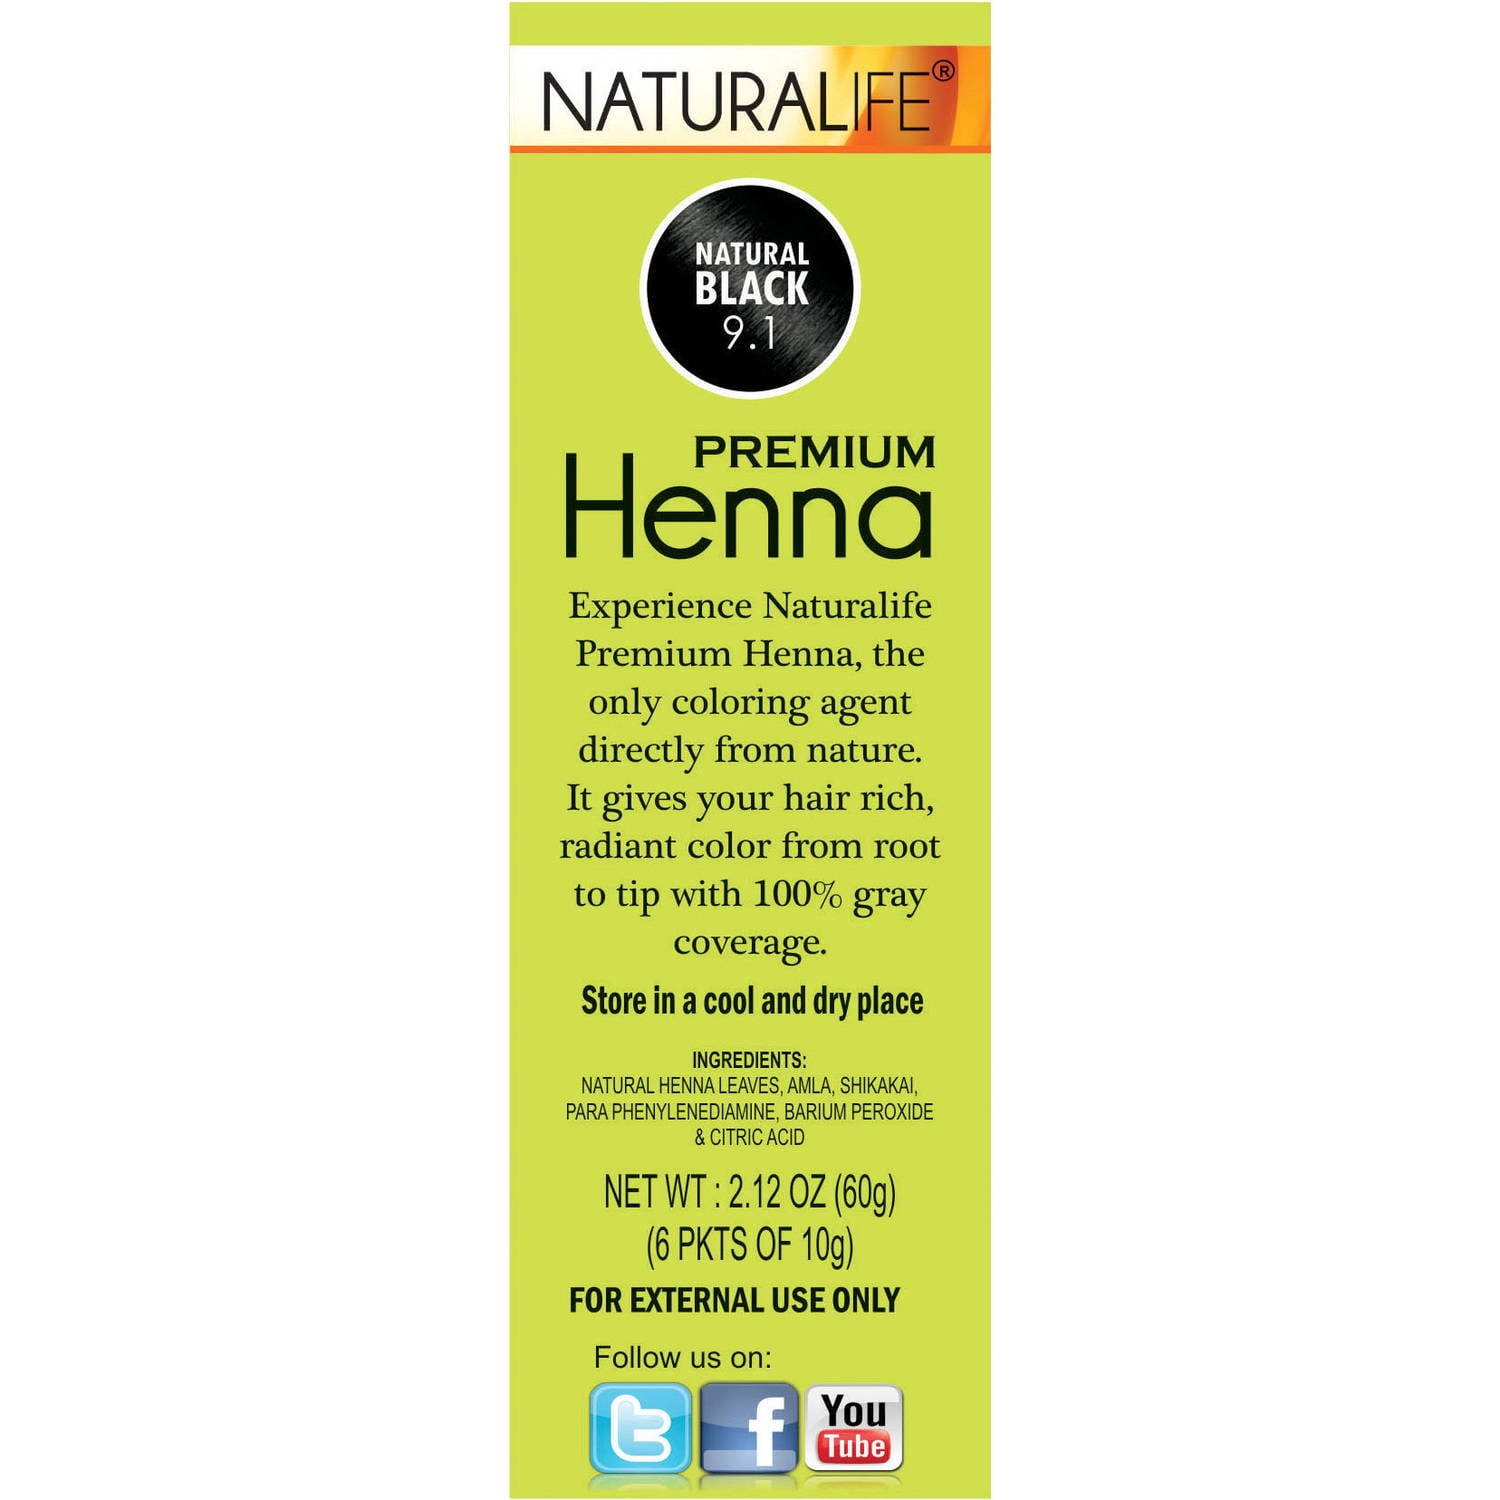 Naturalife Henna Natural Hair Color for Men & Women, Natural Black  -  